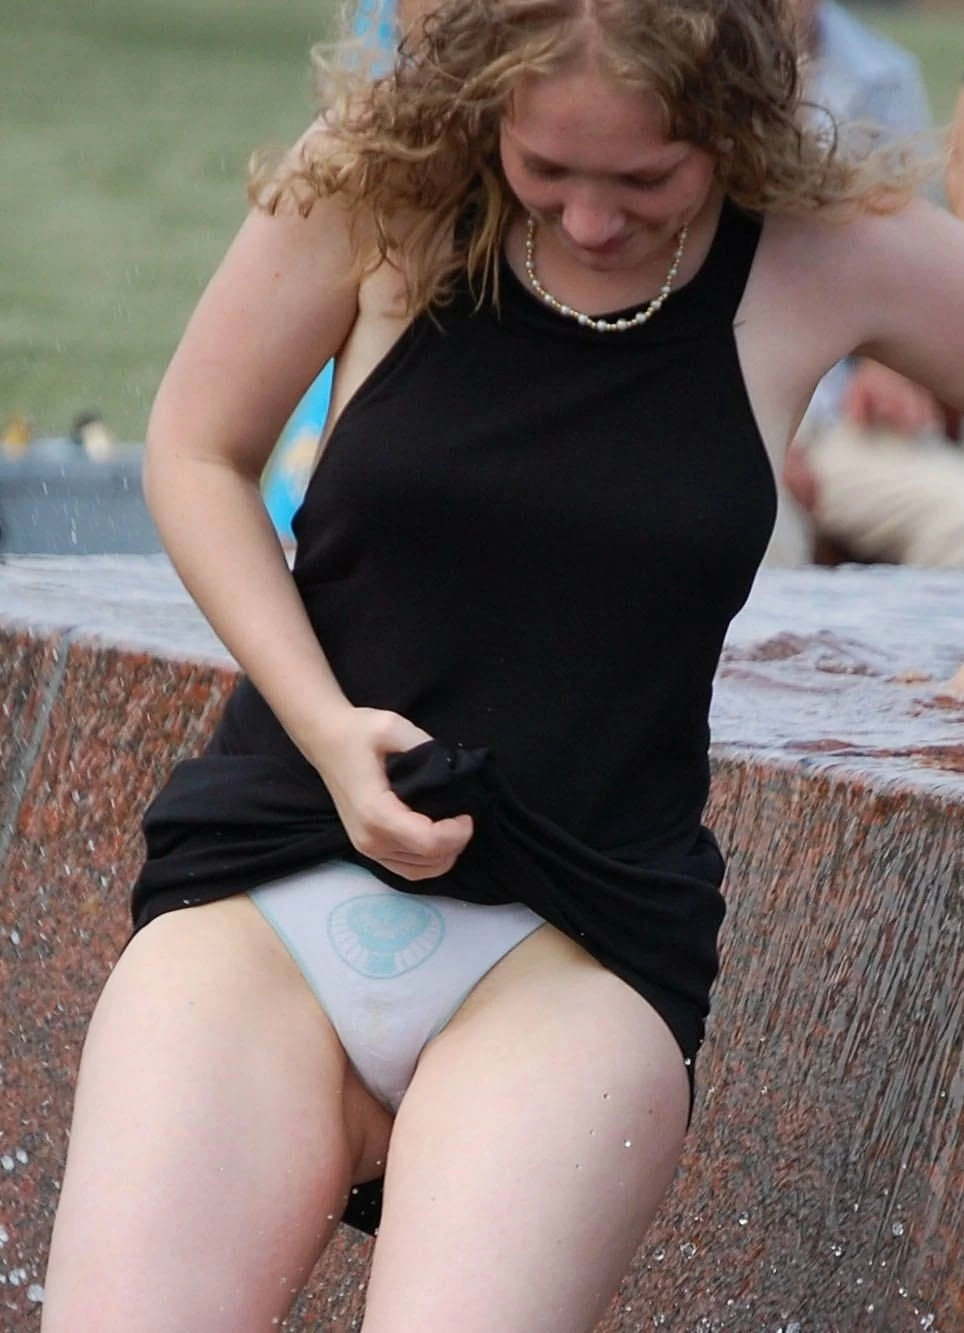 young blonde teen outdoor flashing underwear upskirt  Babes Pics Galleries